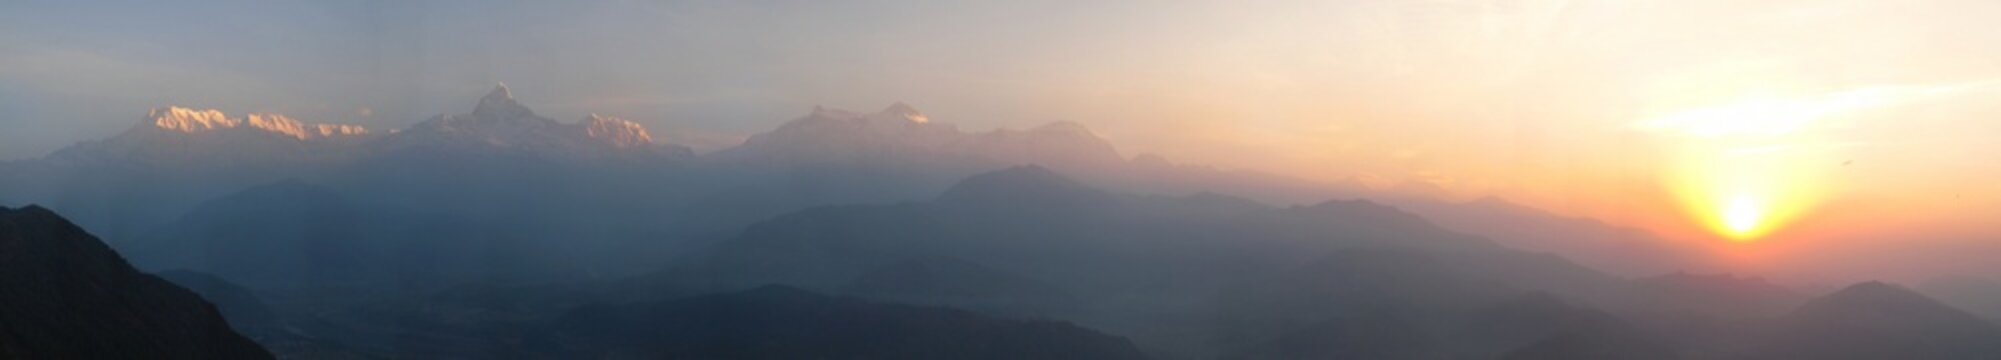 Panorama Gebirge mit Sonnenaufgang